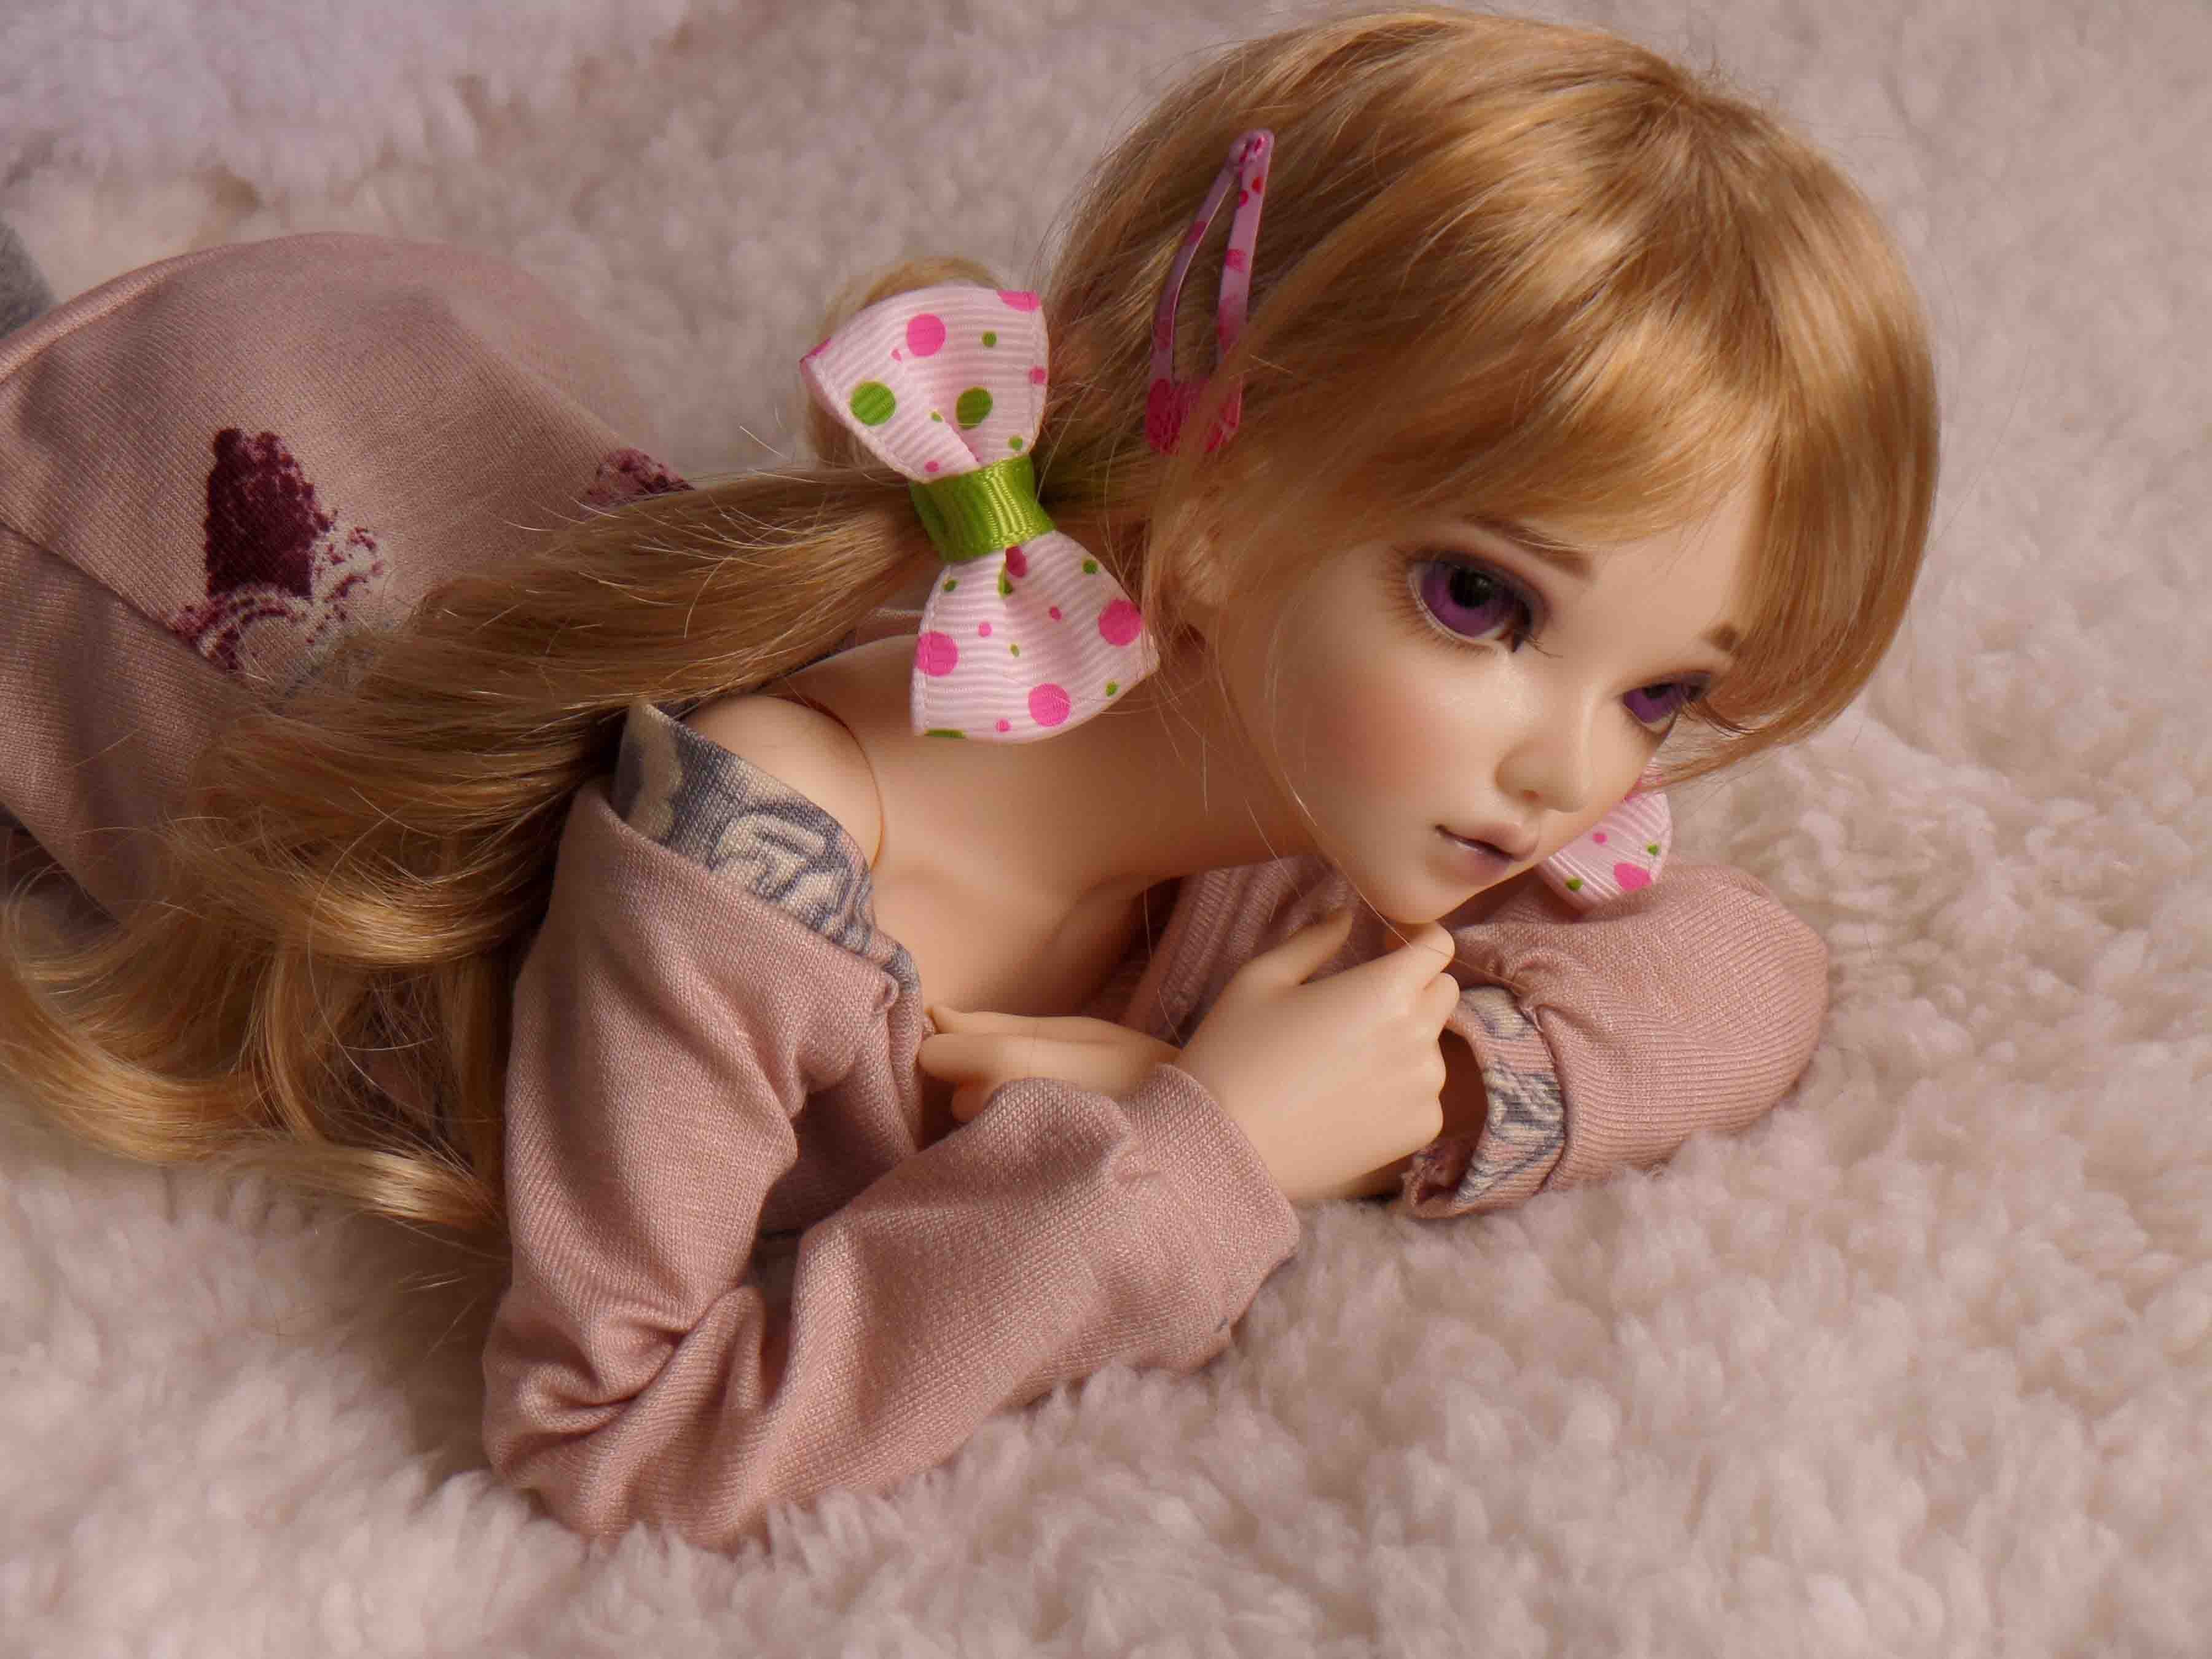 pretty cute baby barbie doll desktop backgrounds download